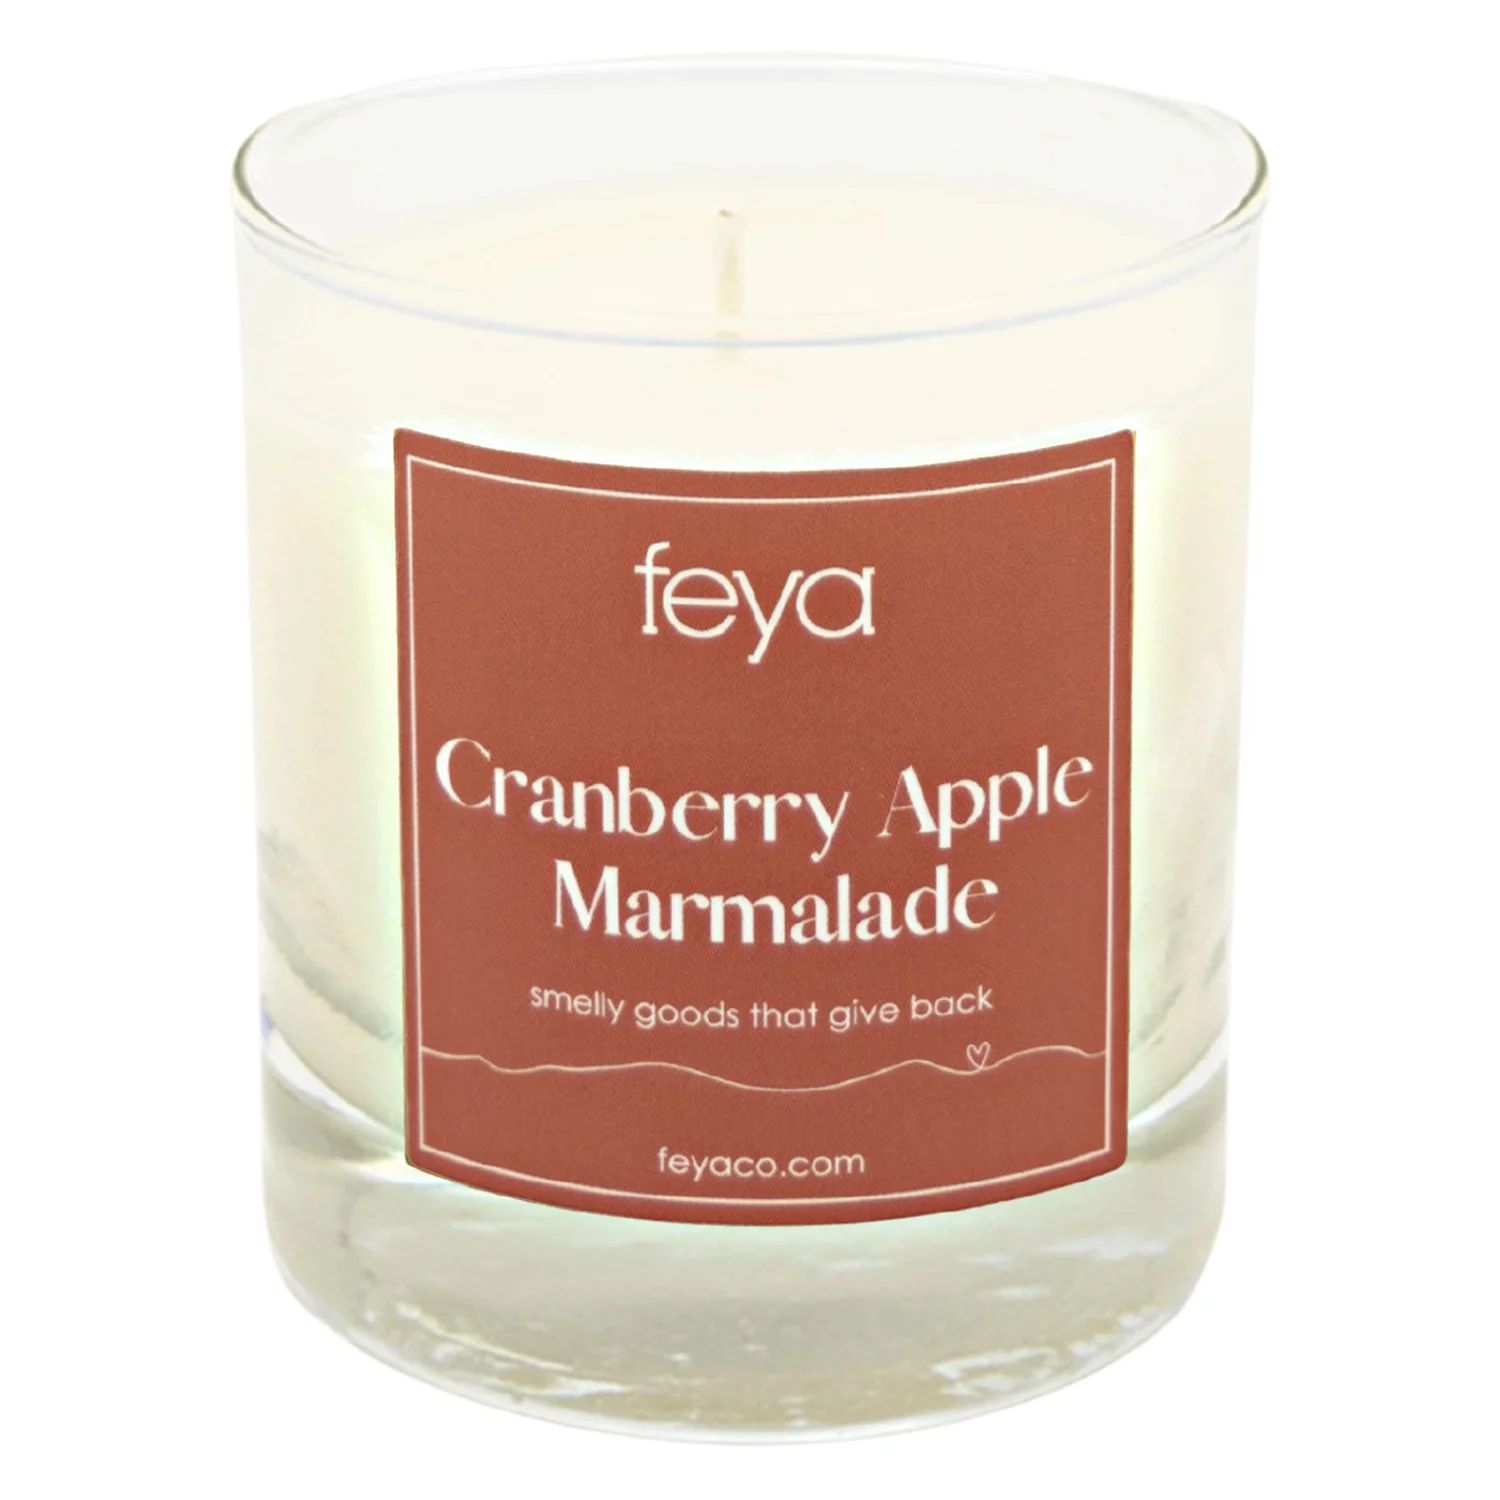 Feya Candle Клюквенно-яблочный мармелад, 6,5 унций. Соевая свеча свеча feya черный дуб смородина 5 унций рид диффузор